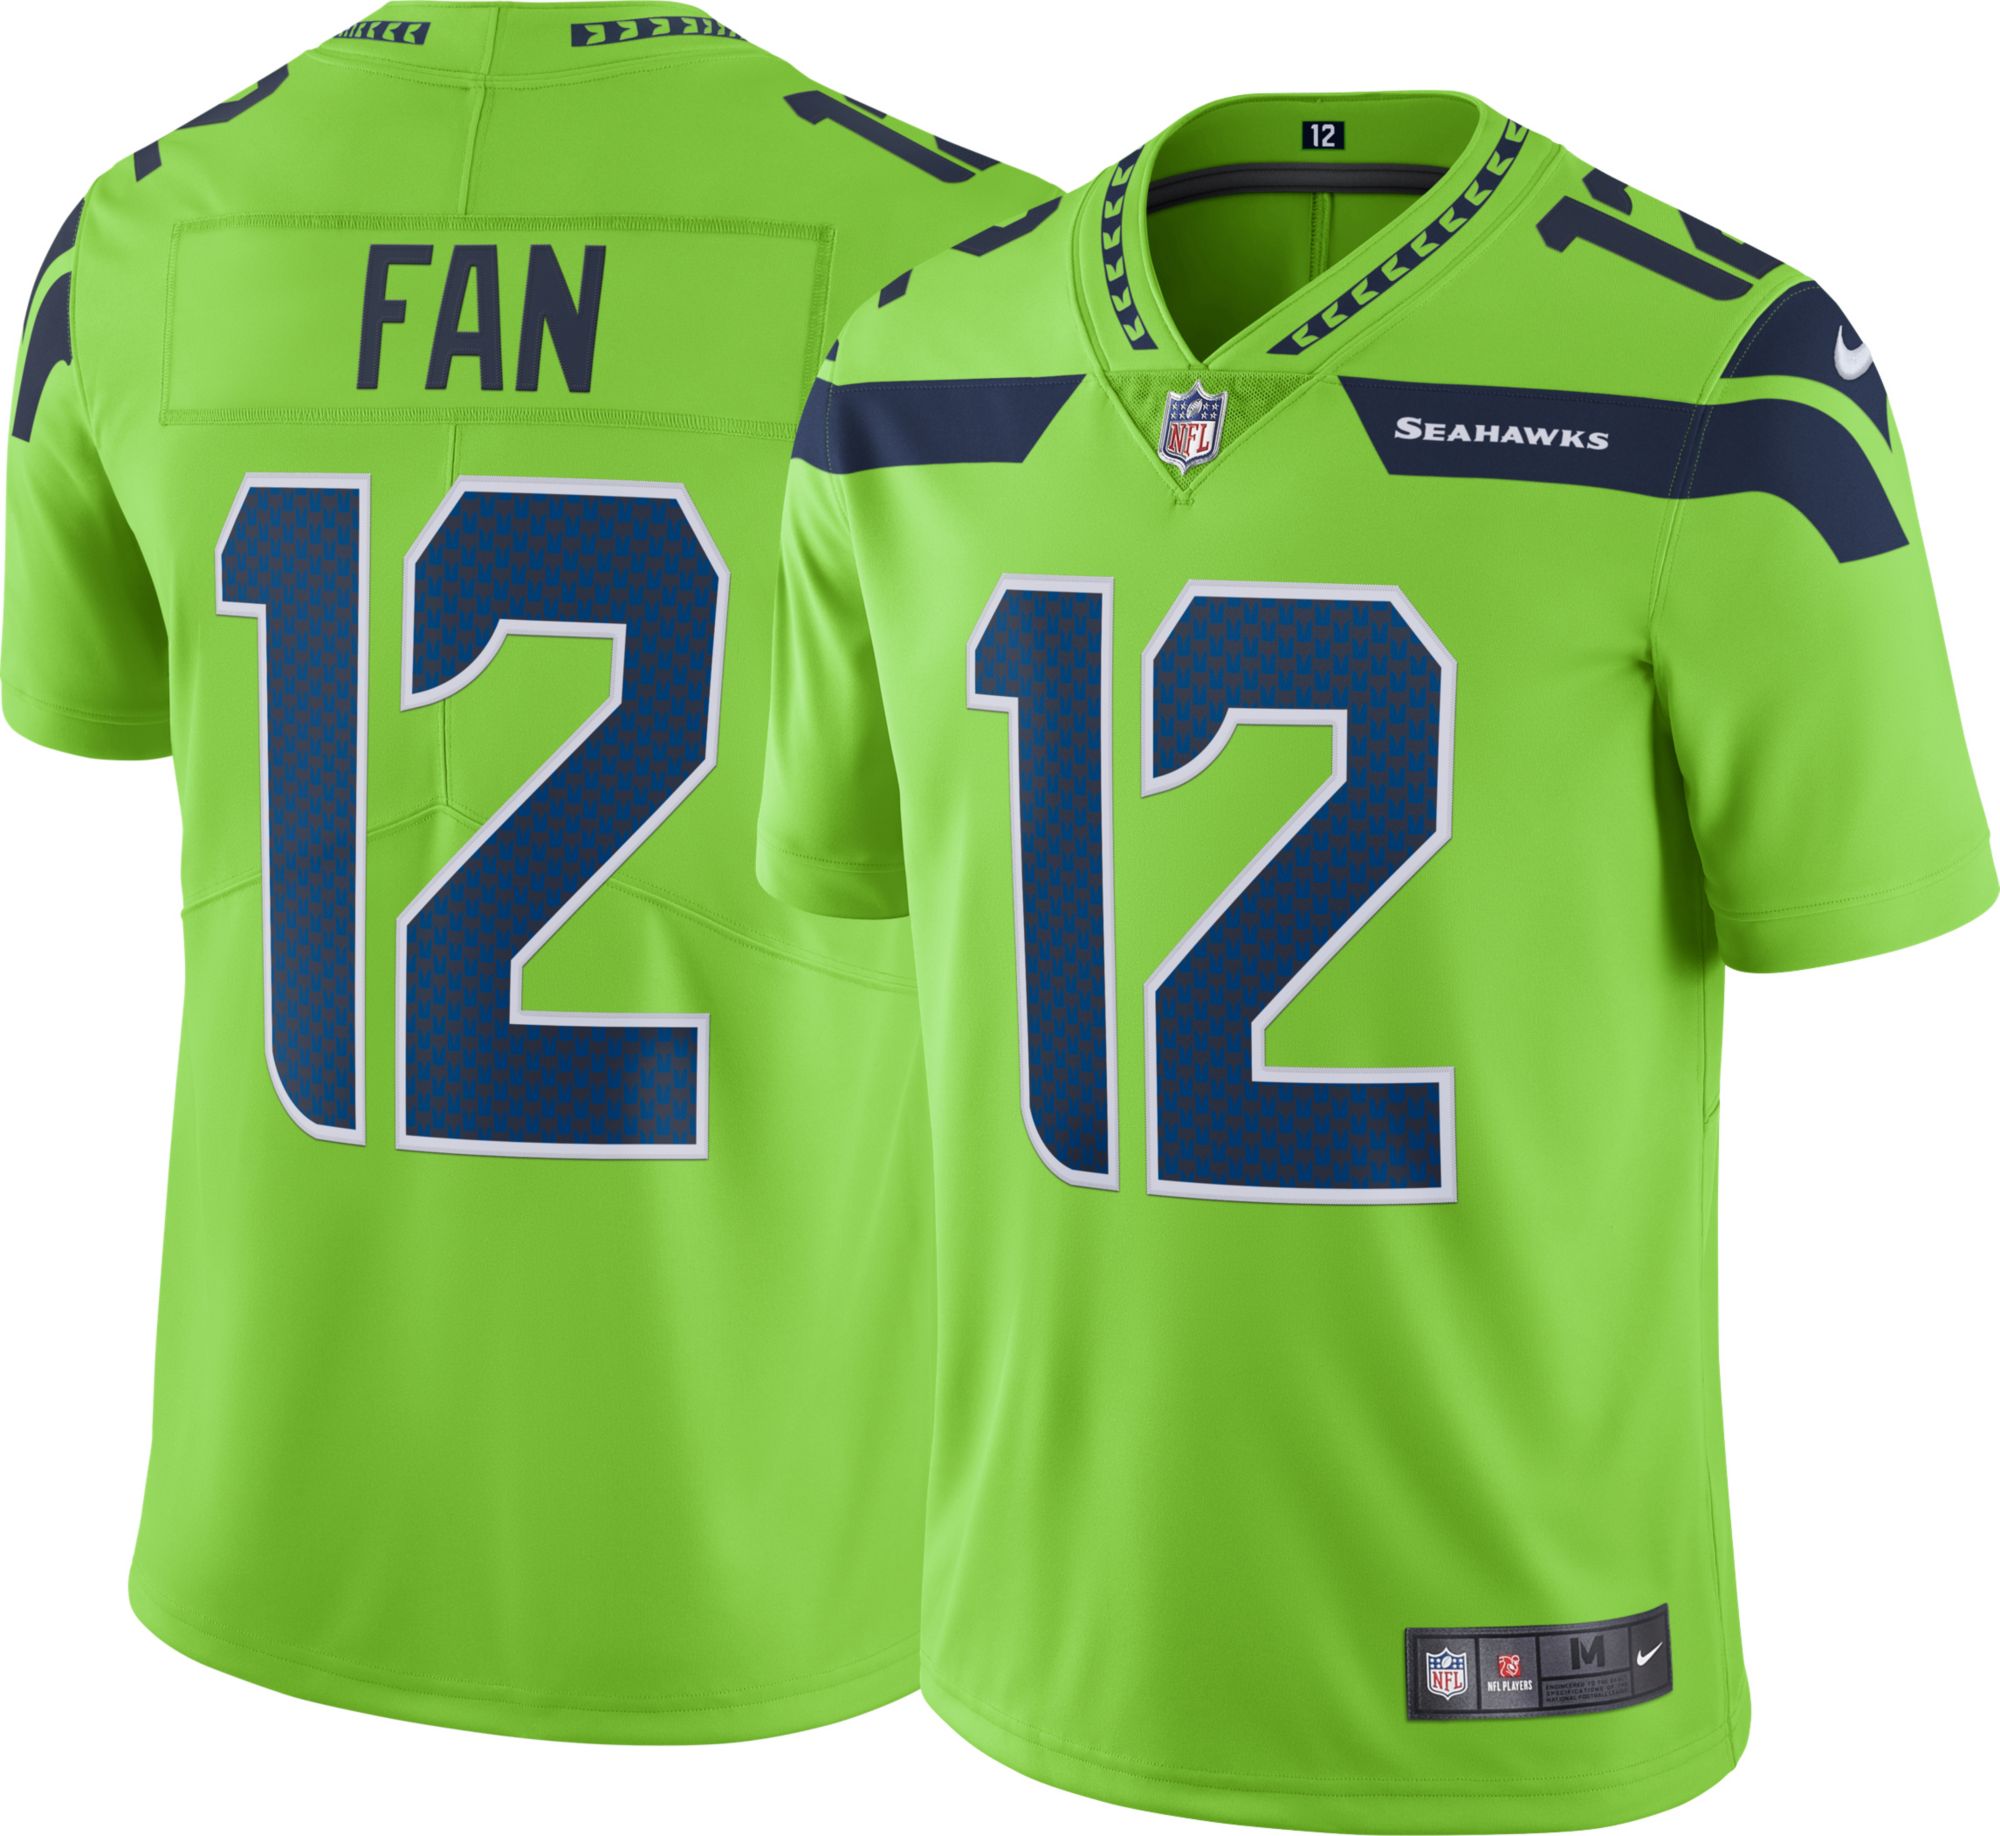 seahawks green jersey for sale